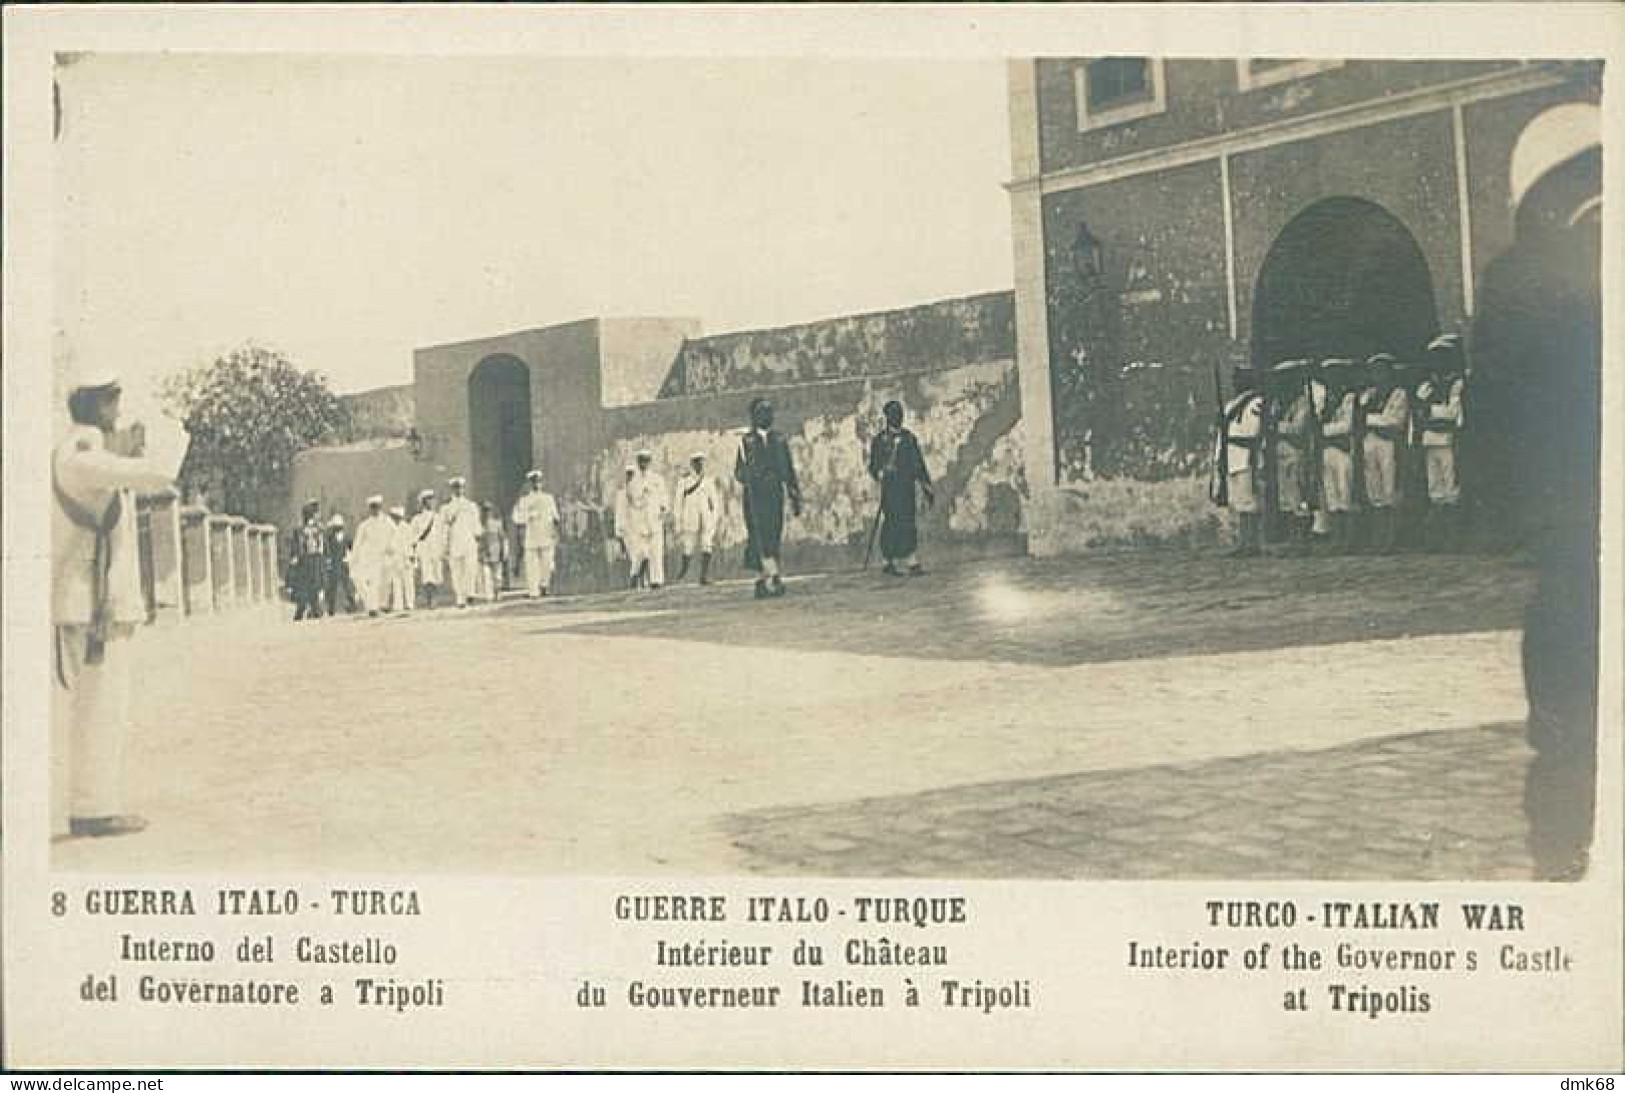 LIBYA / LIBIA - TURKEY / ITALY WAR - INTERIOR OF THE GOVERNOR'S CASTLE AT TRIPOLI - RPPC POSTCARD 1910s (12596) - Libyen